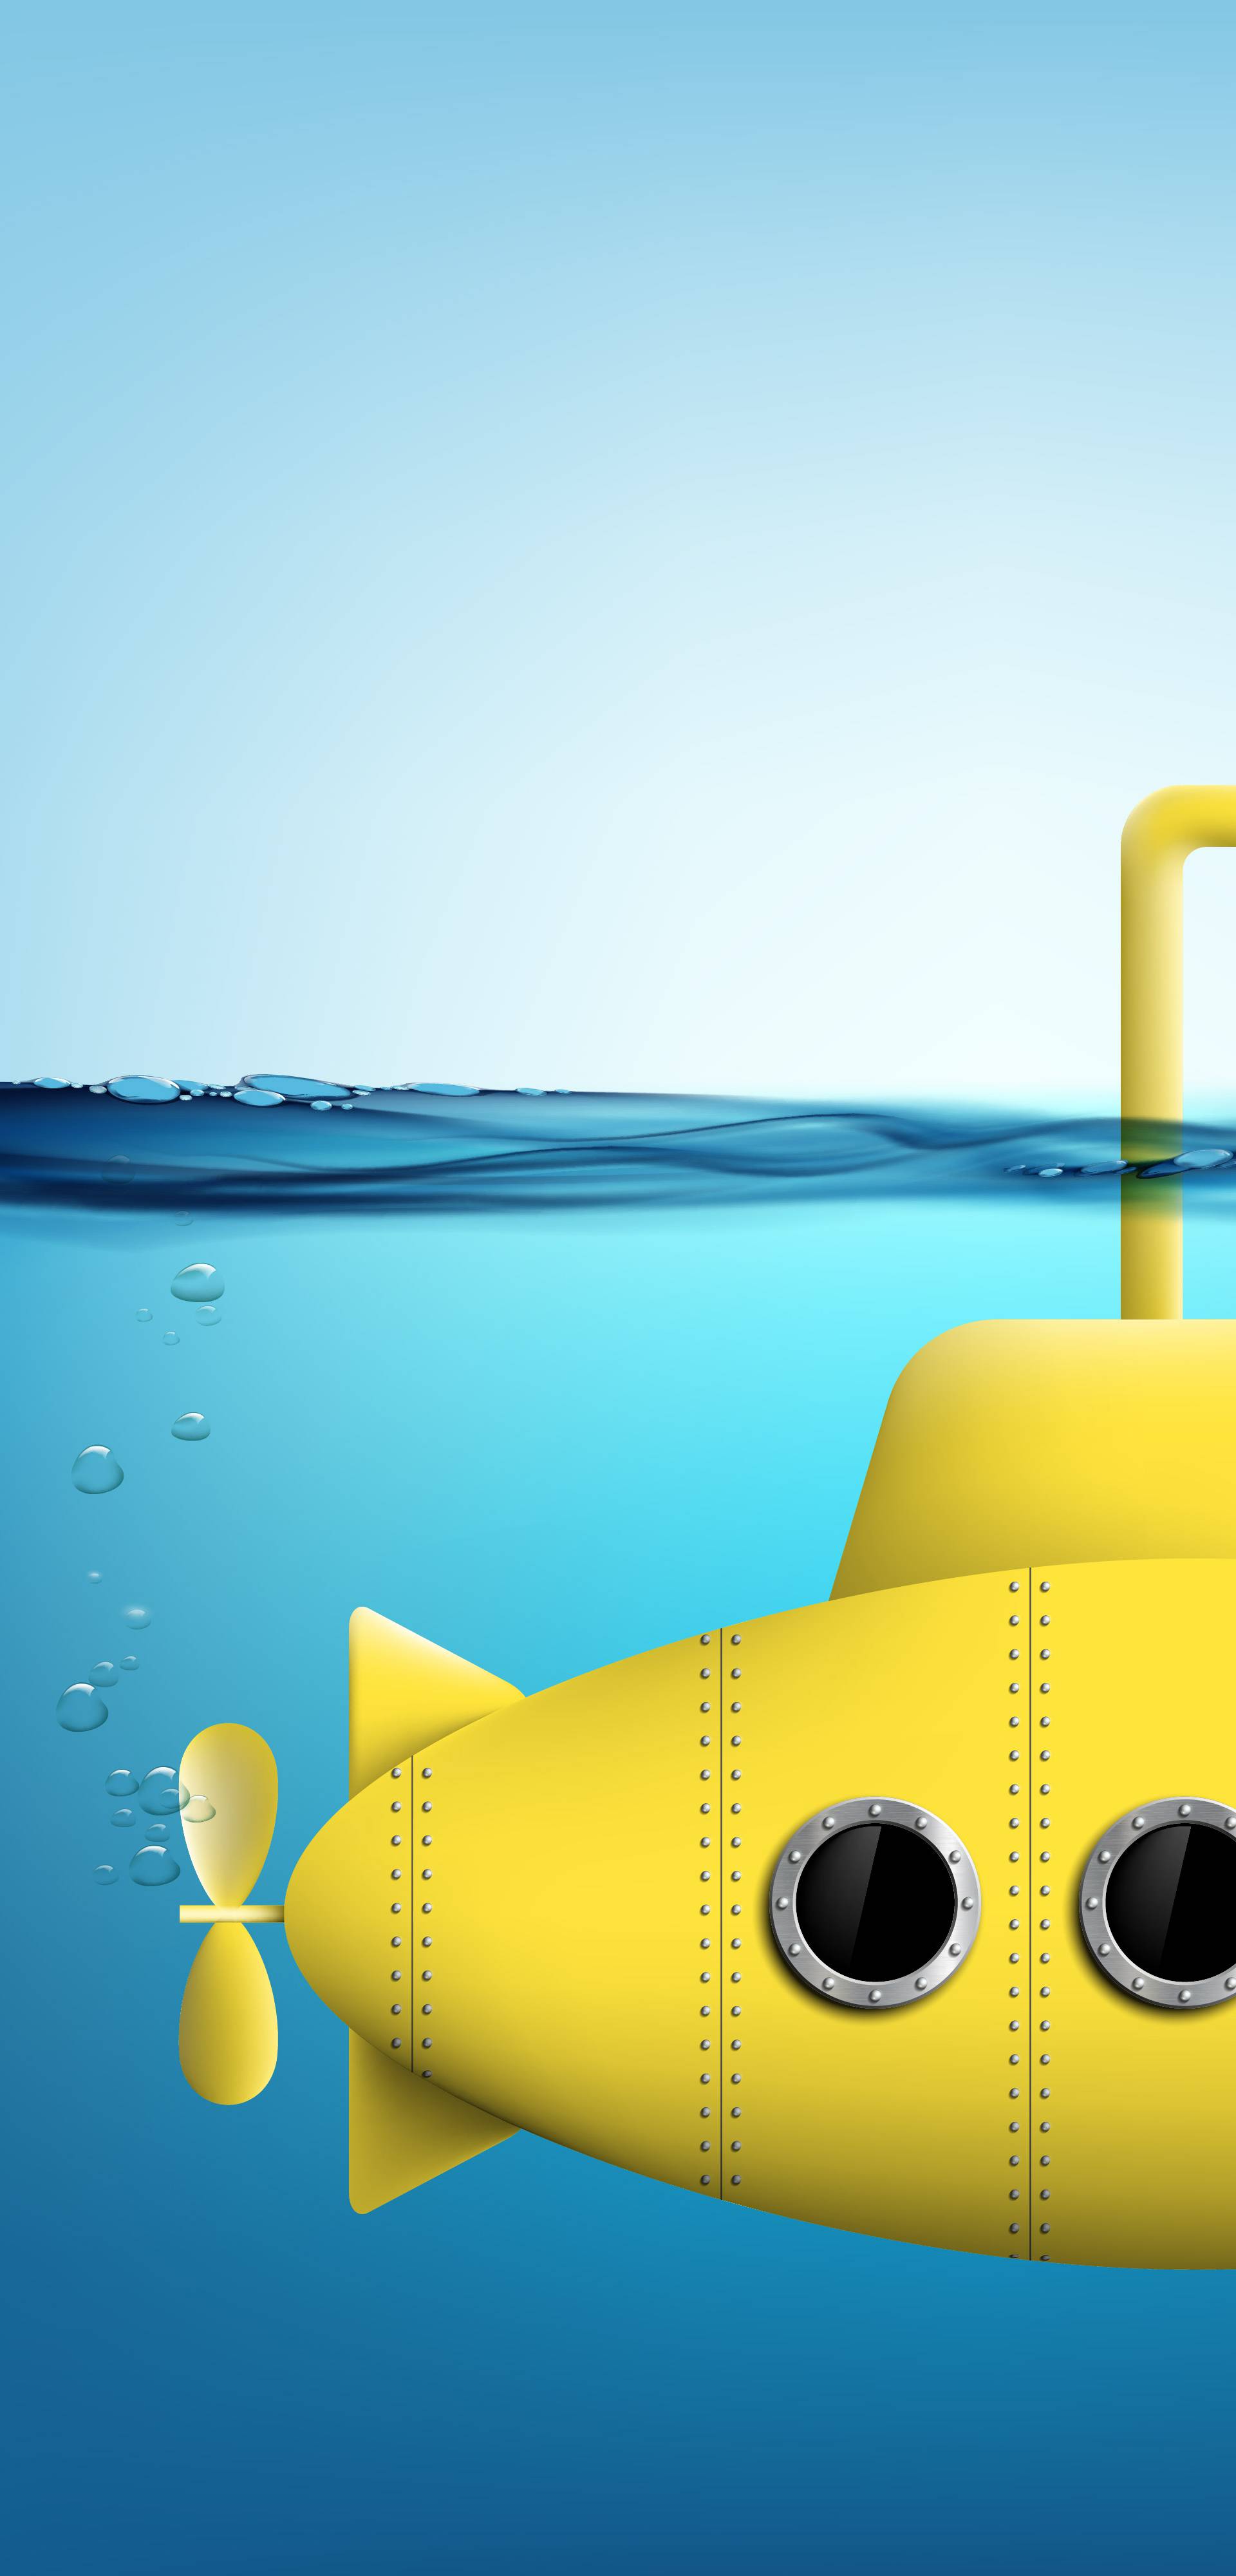 submarine with periscope underwater